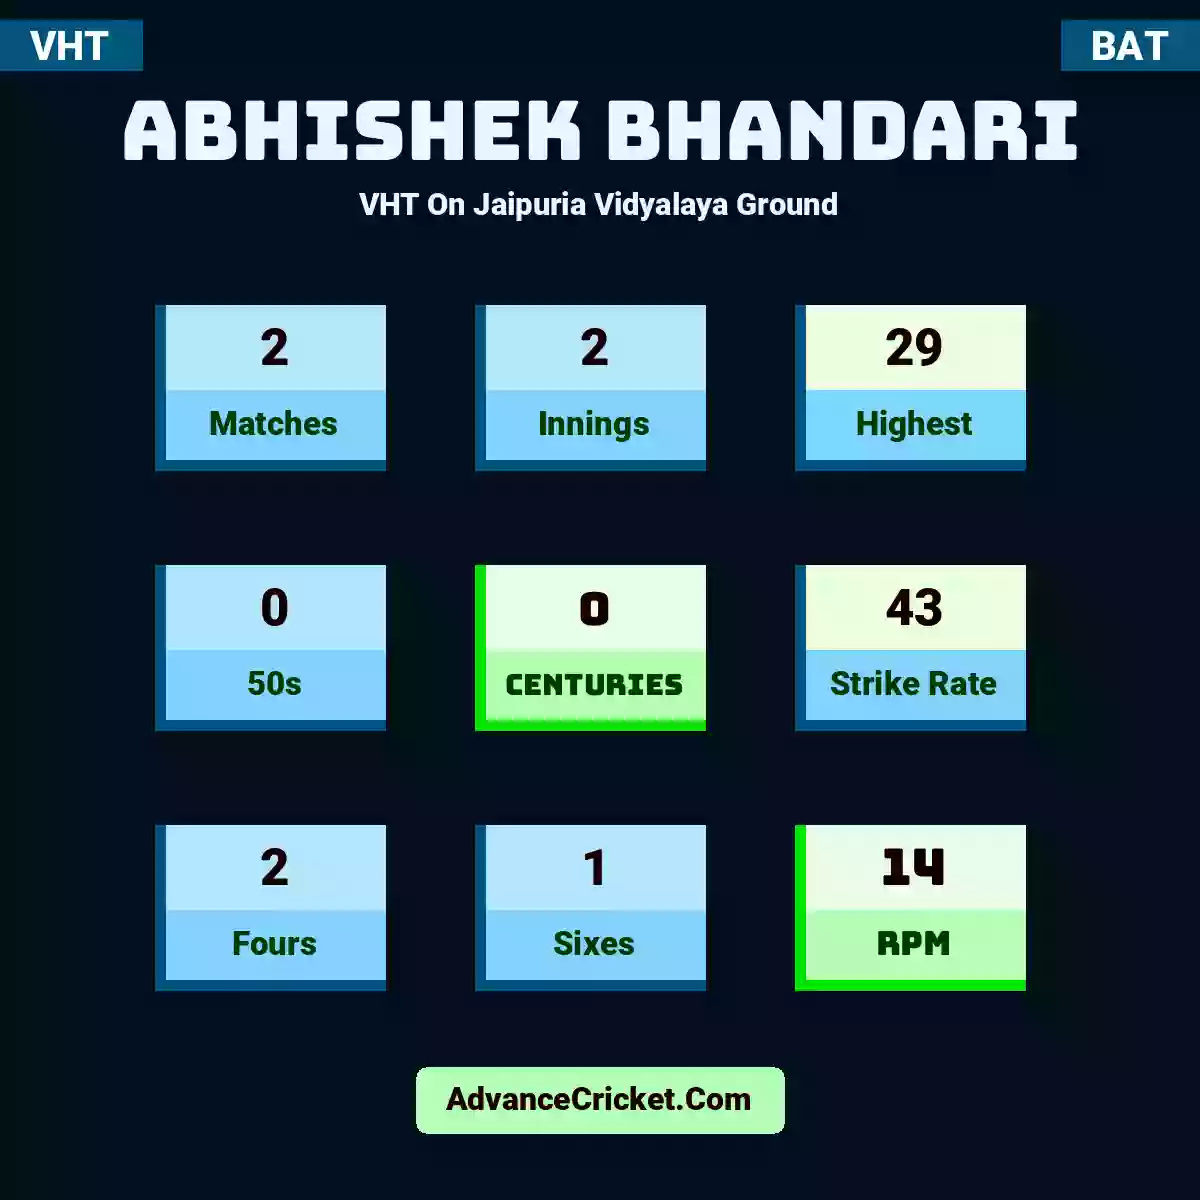 Abhishek Bhandari VHT  On Jaipuria Vidyalaya Ground, Abhishek Bhandari played 2 matches, scored 29 runs as highest, 0 half-centuries, and 0 centuries, with a strike rate of 43. A.Bhandari hit 2 fours and 1 sixes, with an RPM of 14.